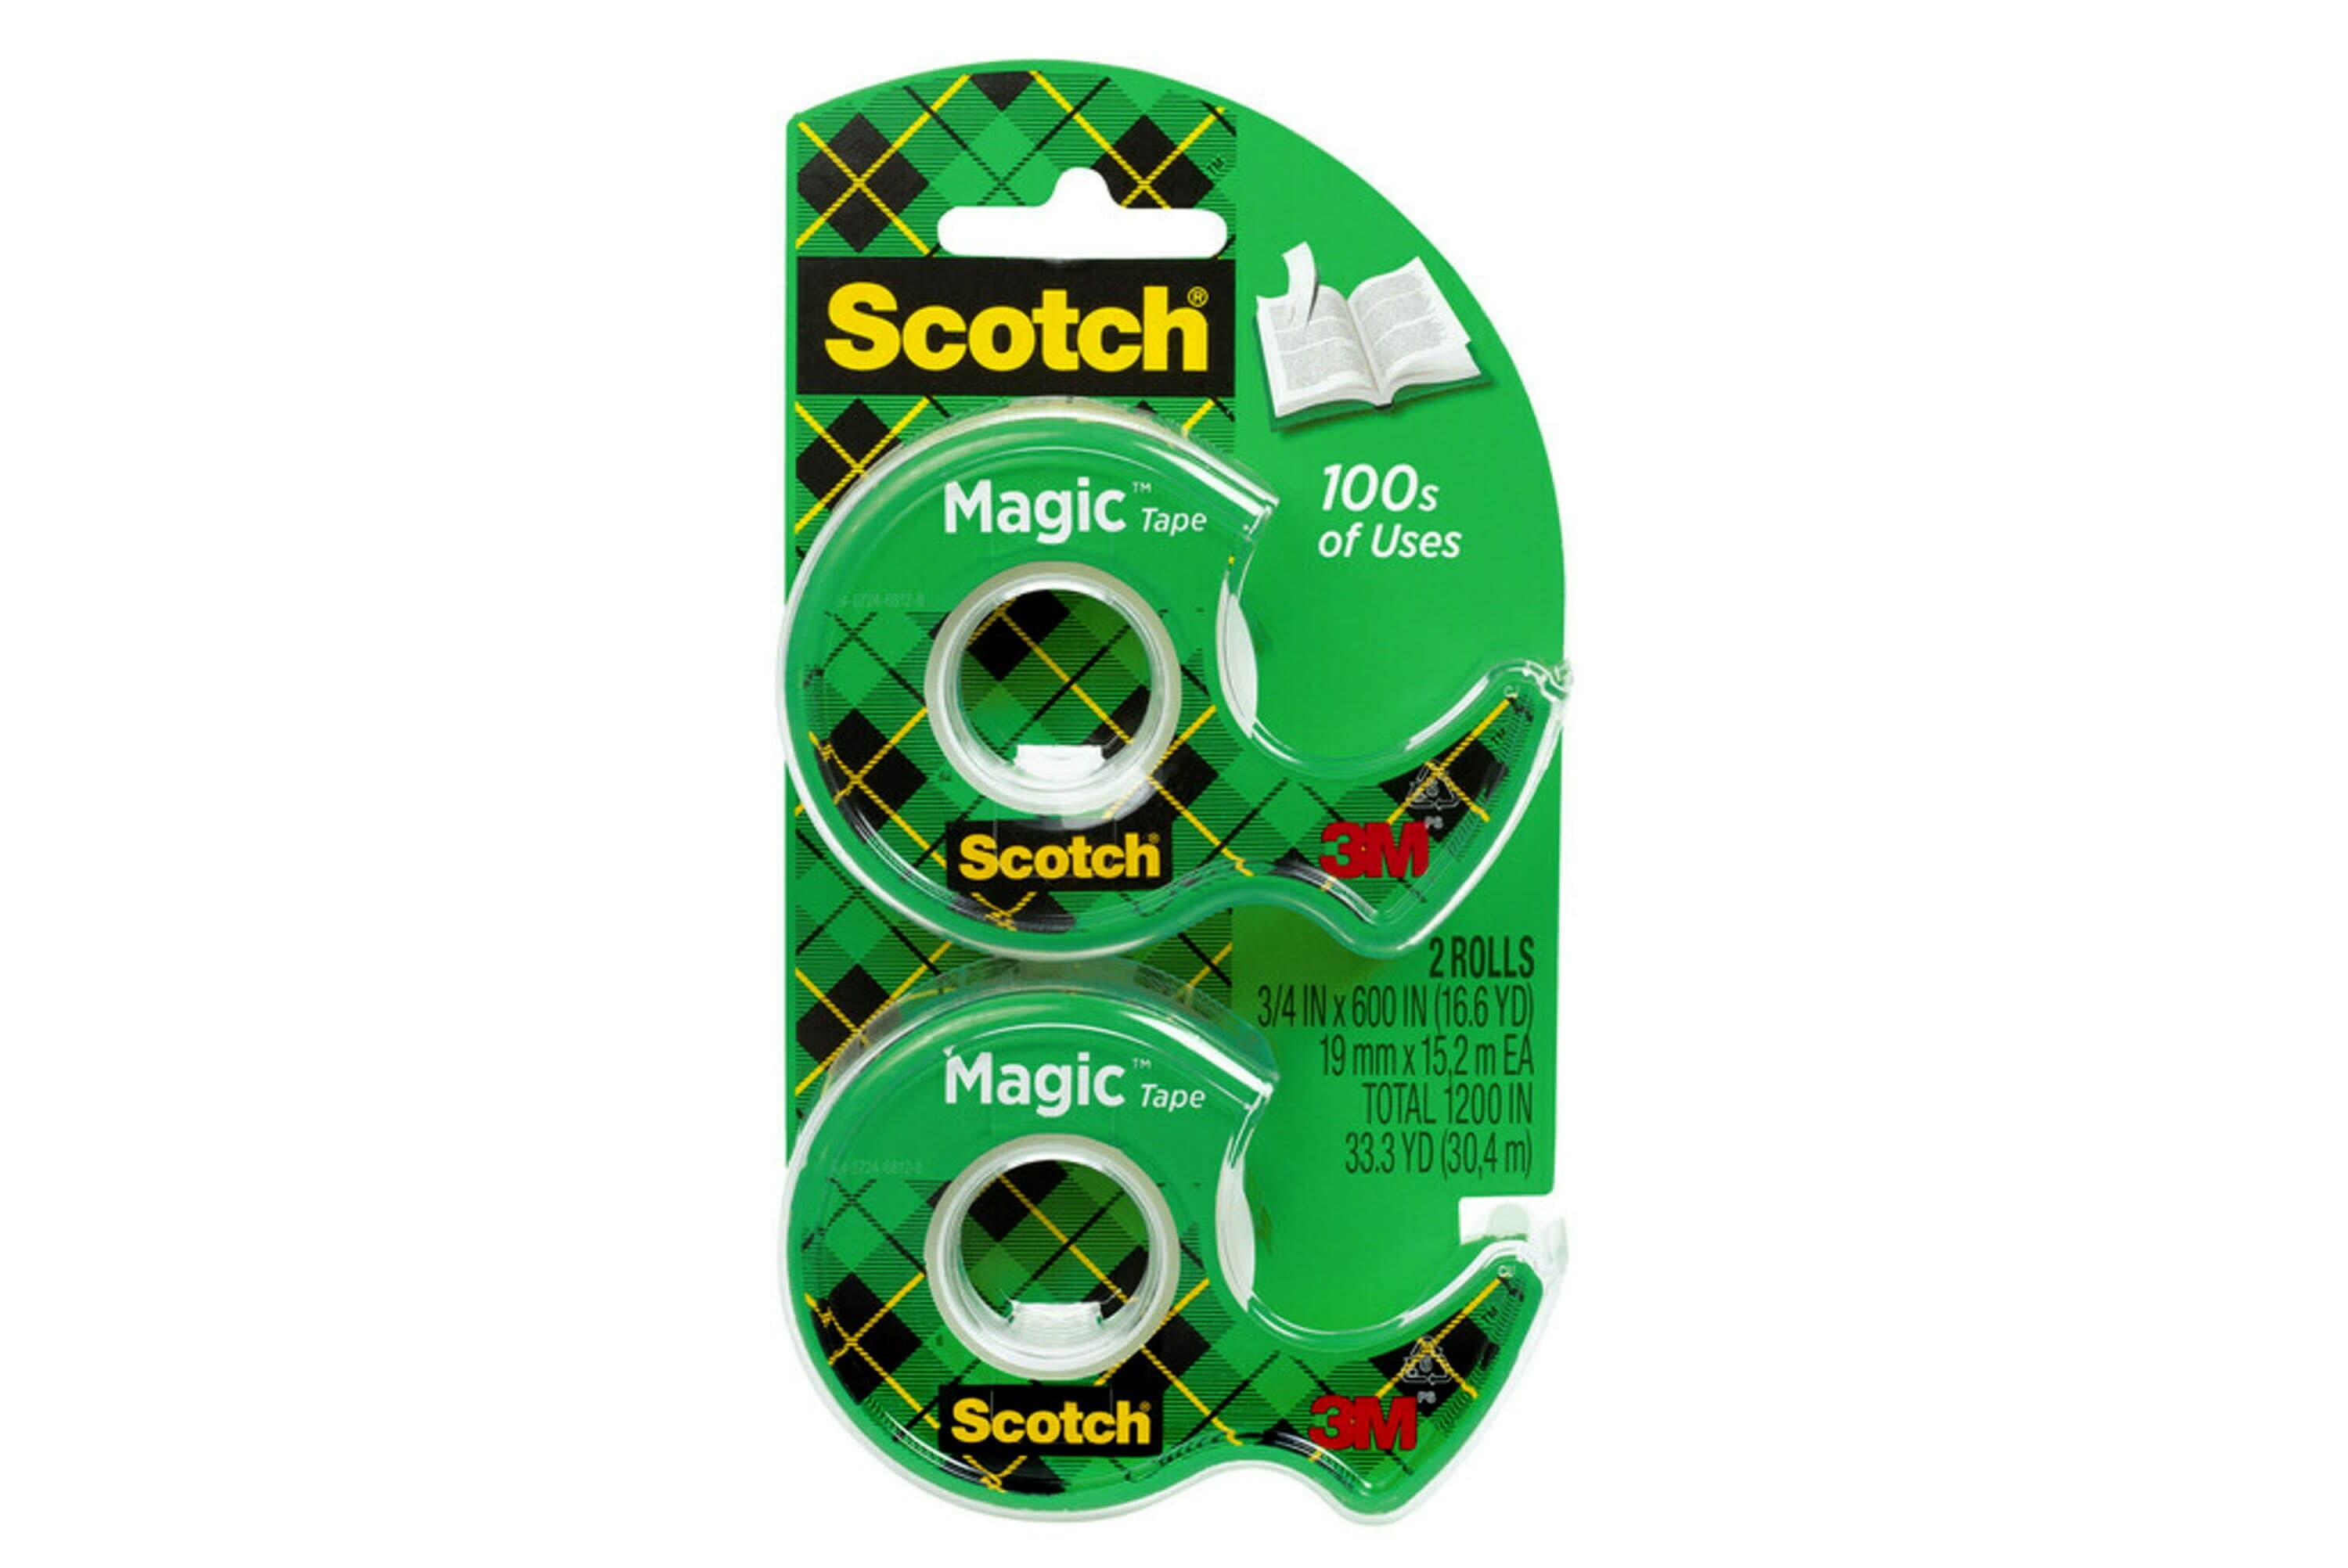 Scotch - Scotch Pop-Up Tape Dispenser Refills (3 count), Shop